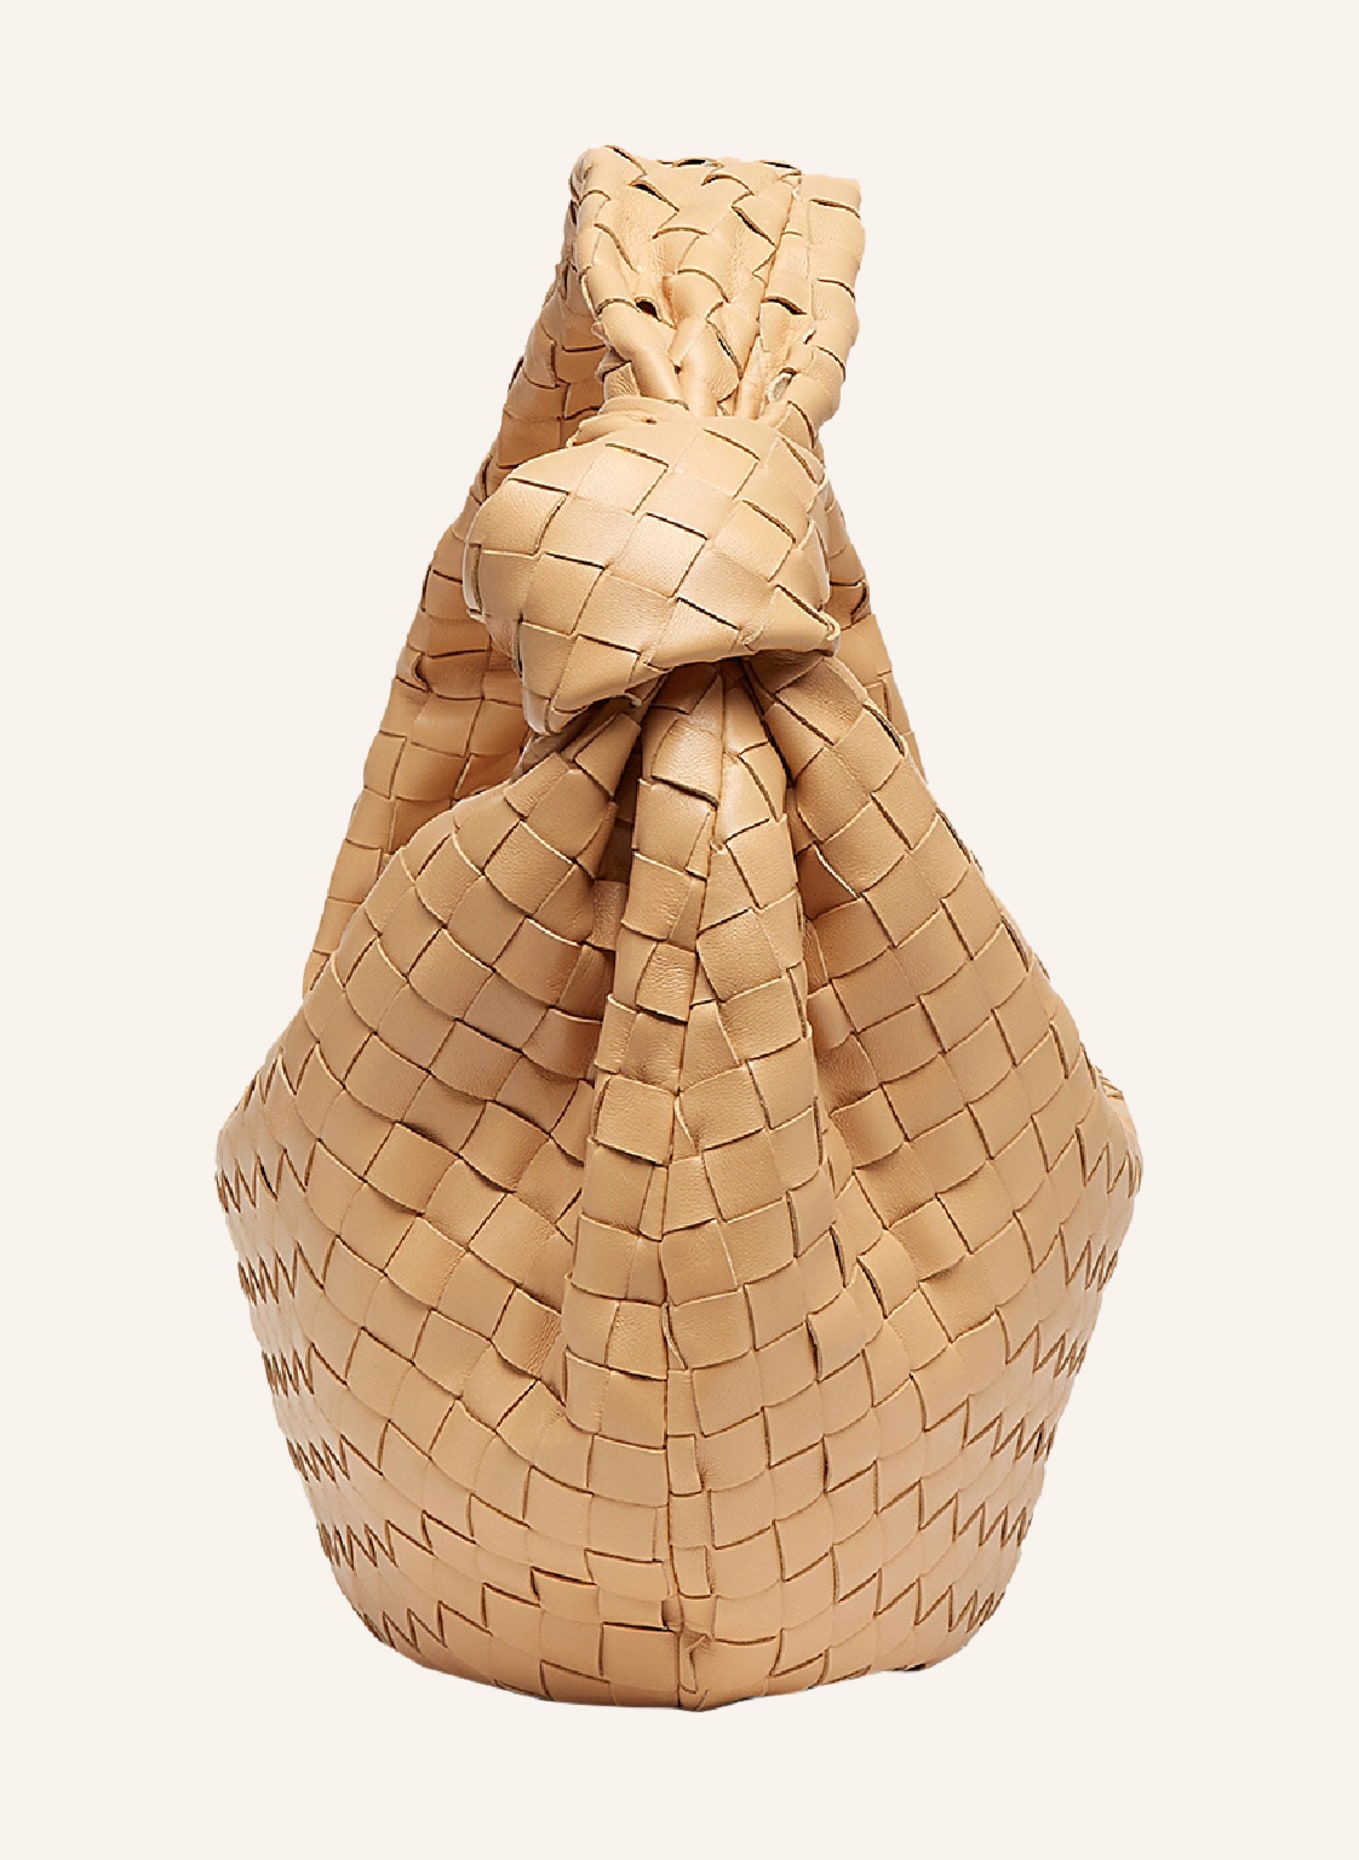 Bag of the Week: Bottega Veneta Jodie Hobo Bag — The Luxury Closet